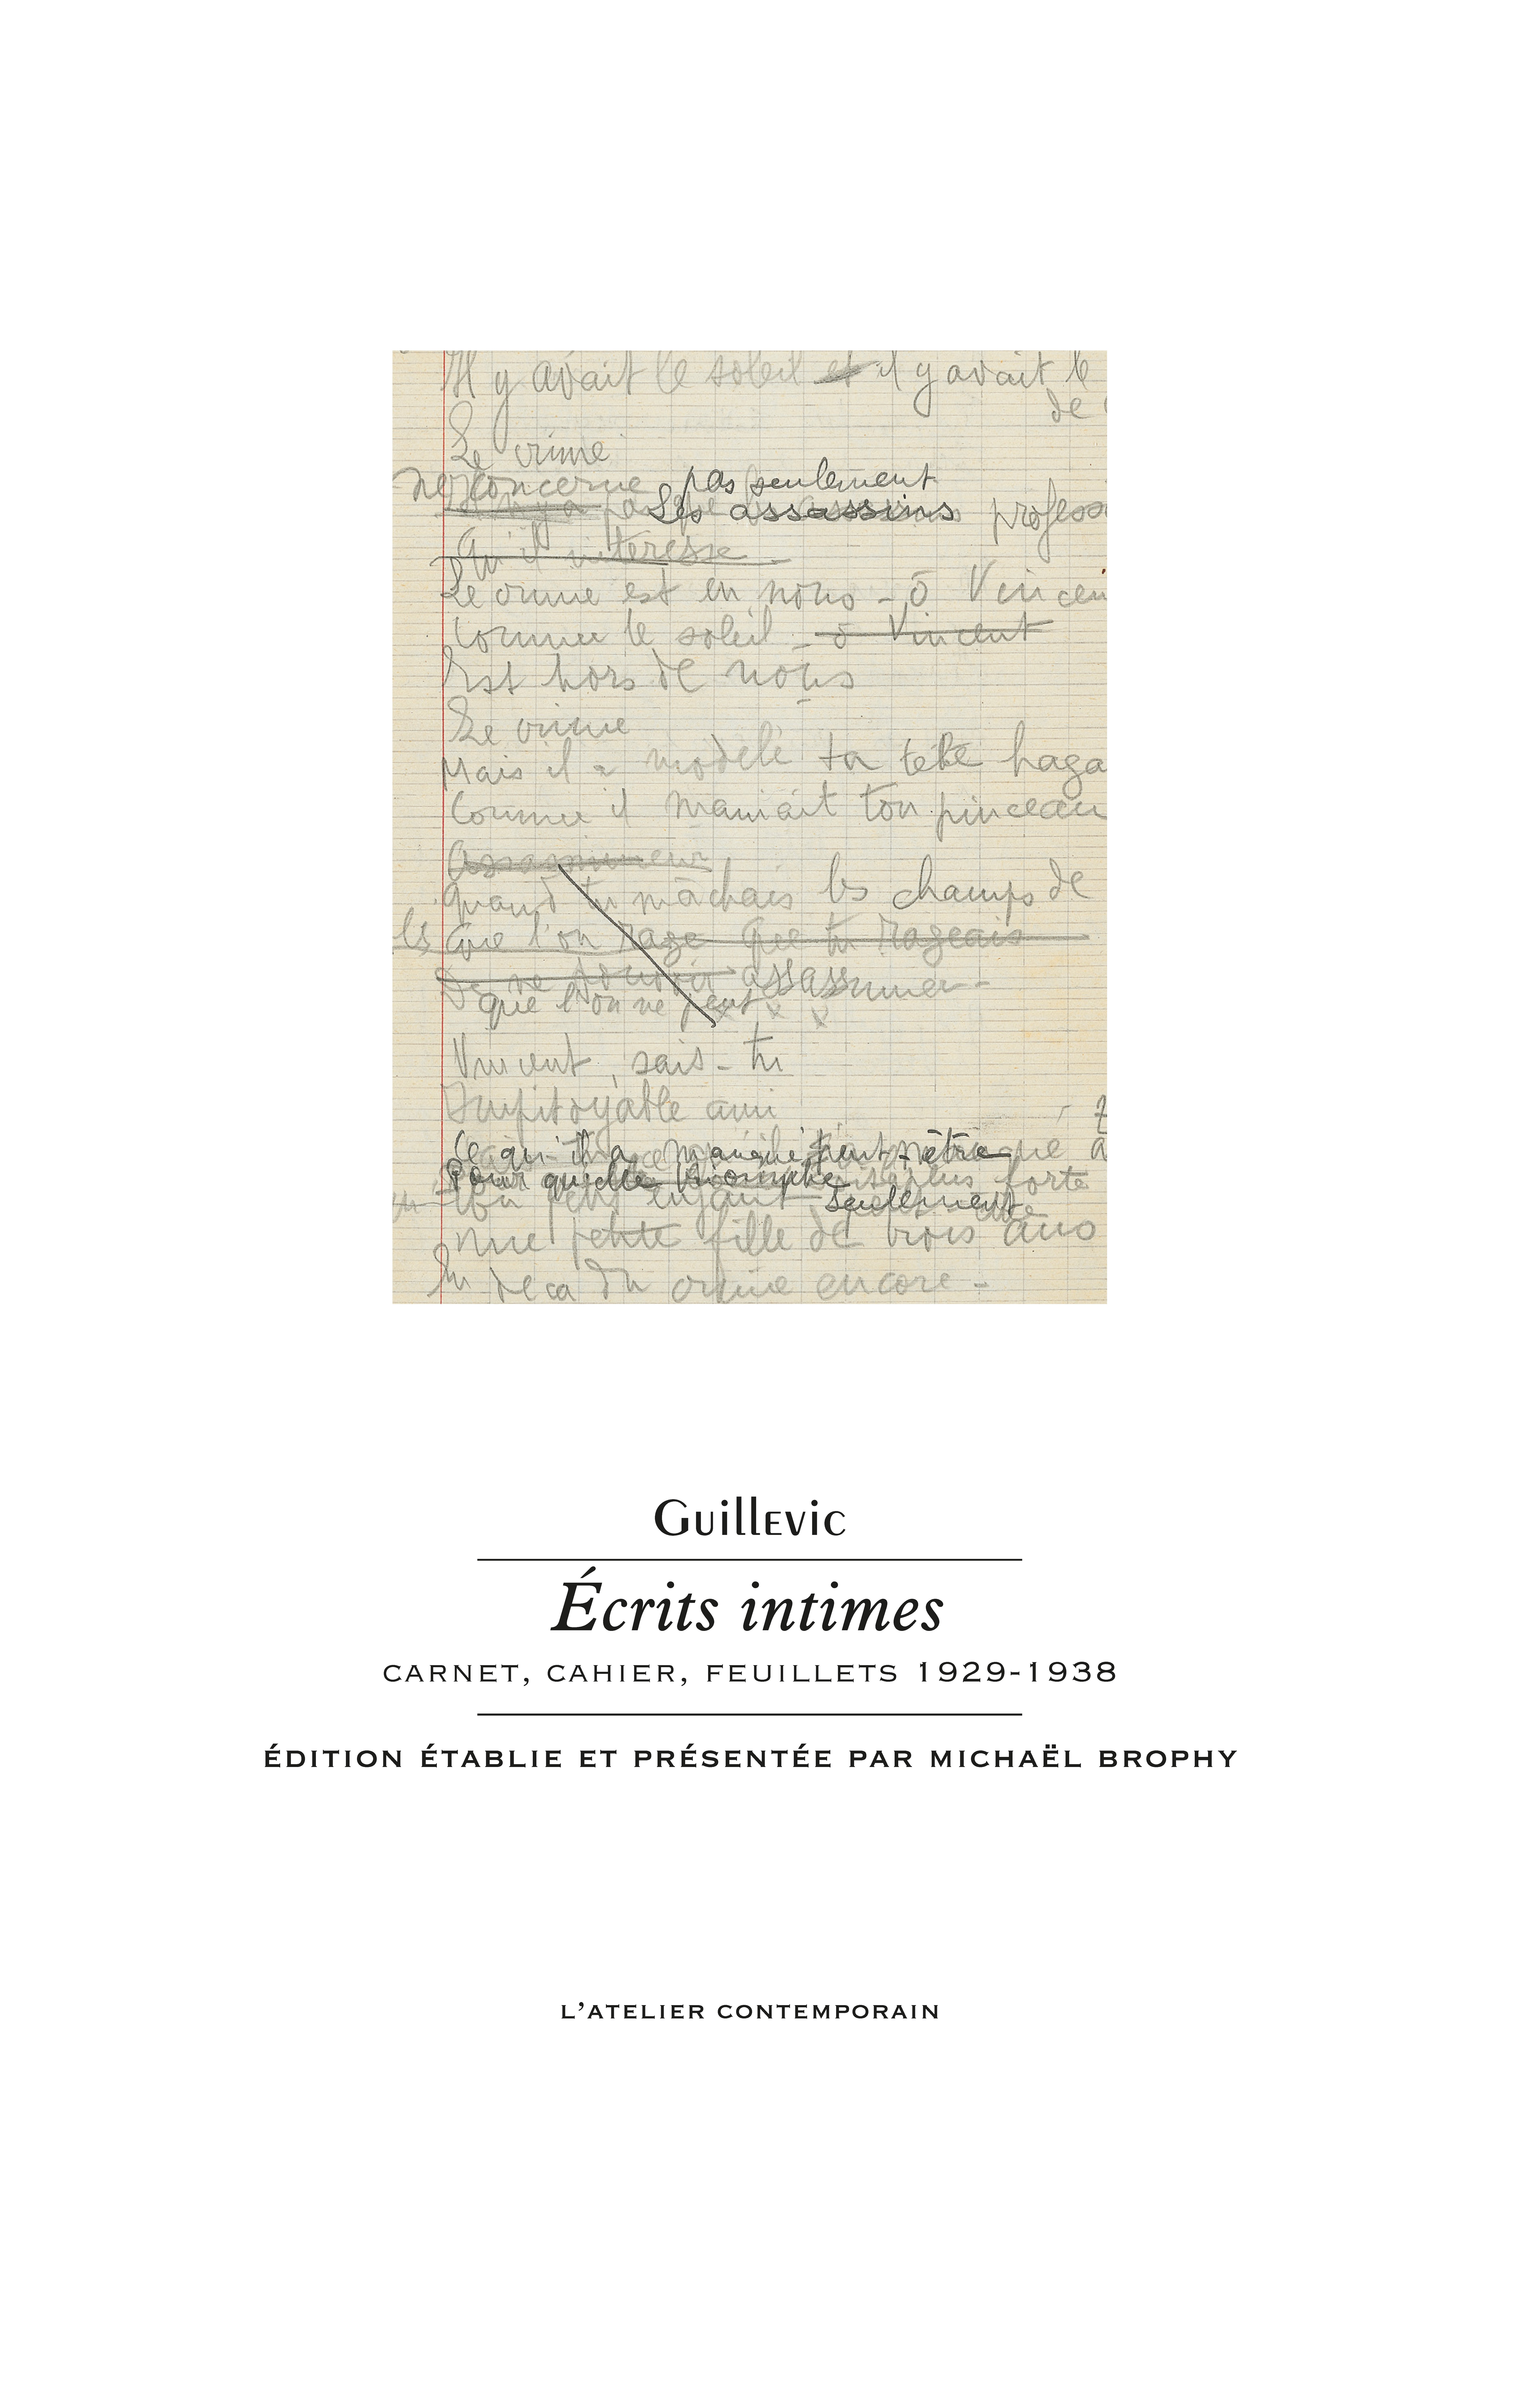 Guillevic, Écrits intimes. Carnet, cahier, feuillets 1929-1938